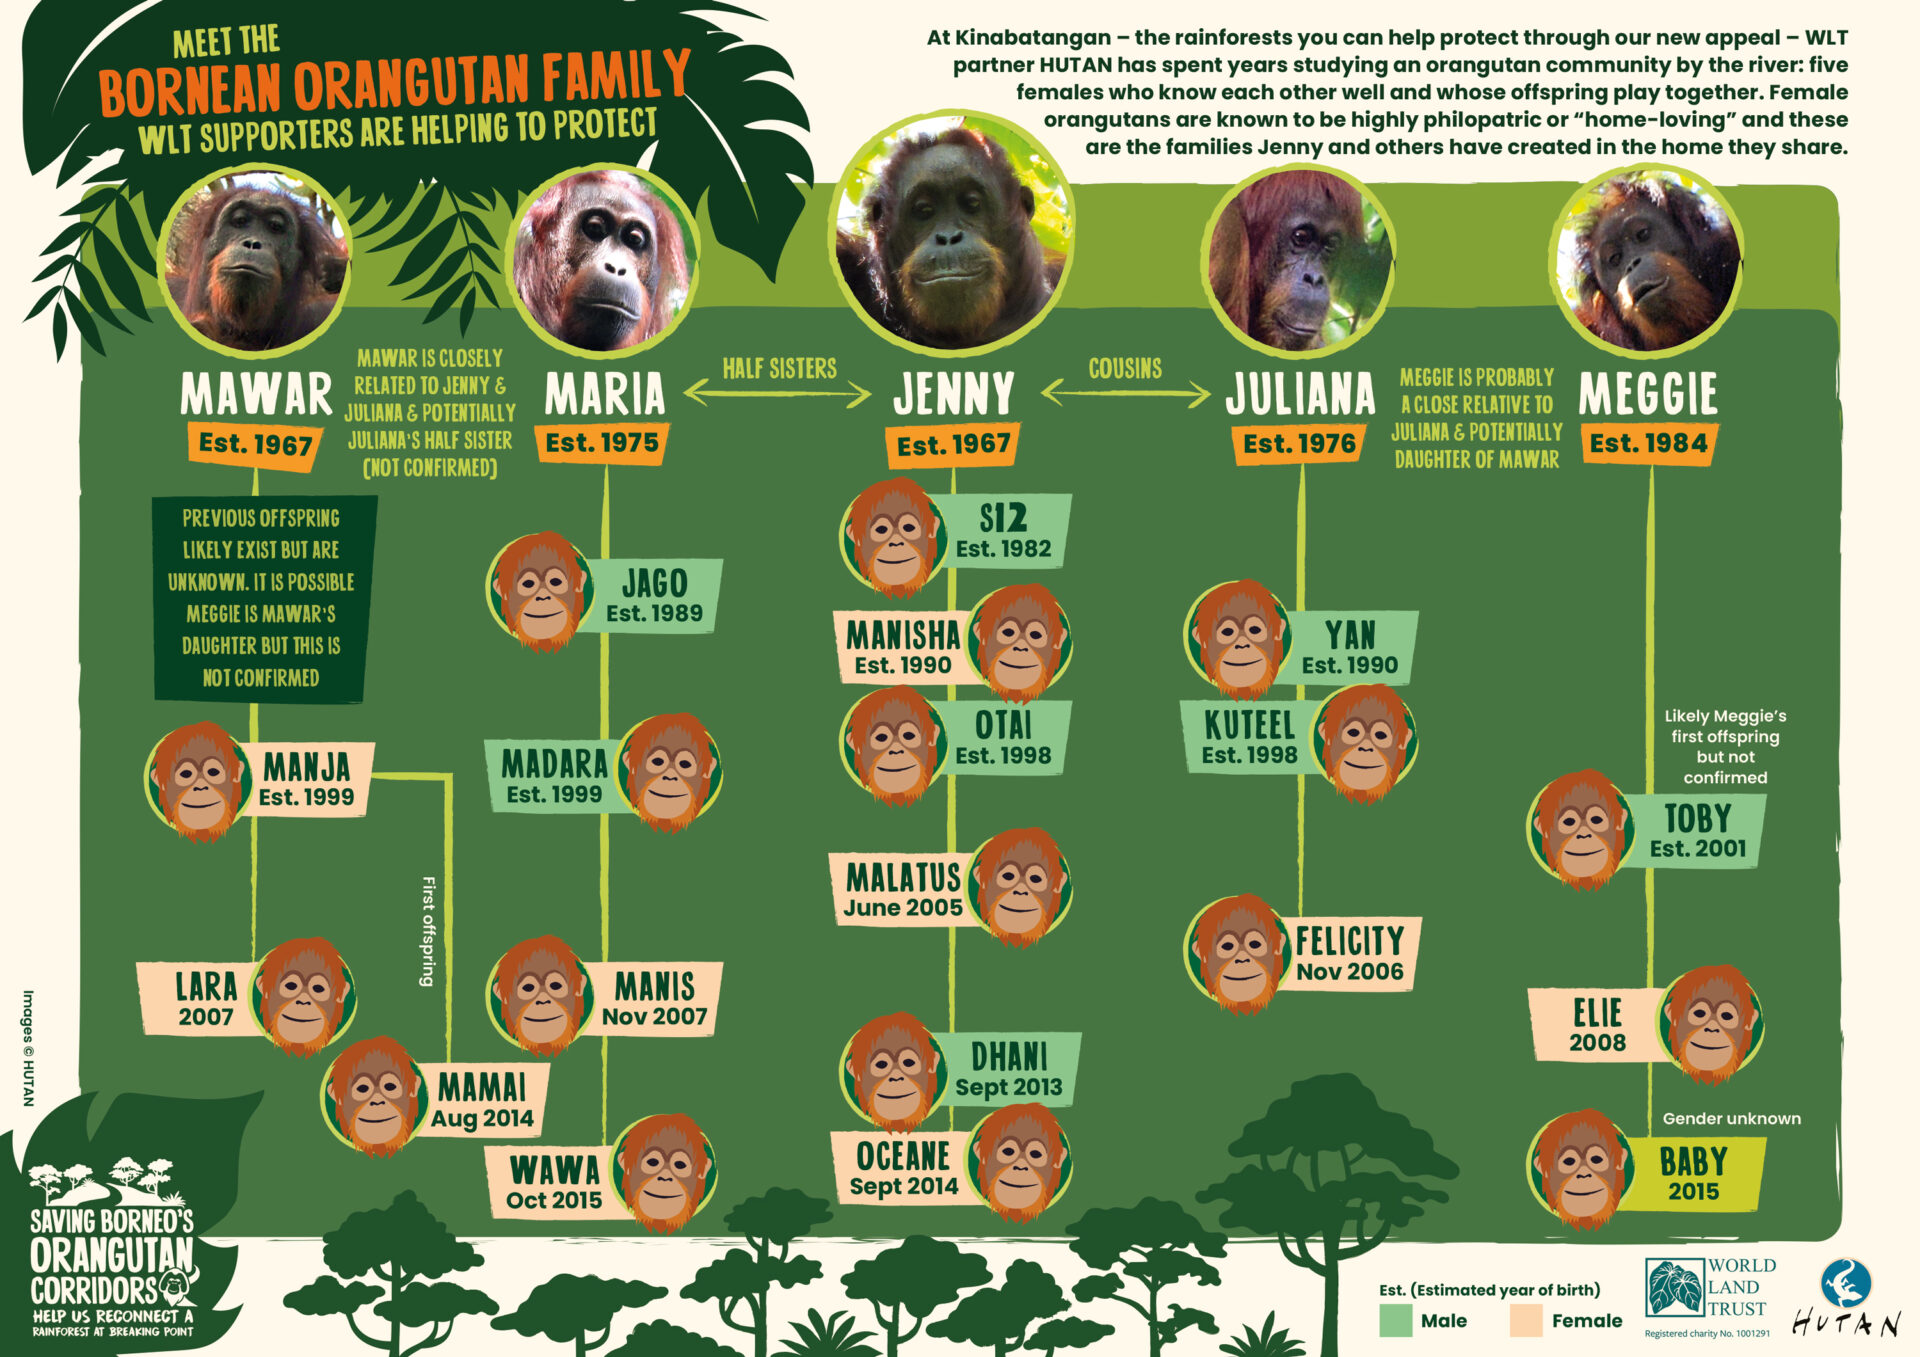 HUTAN Orangutan family tree